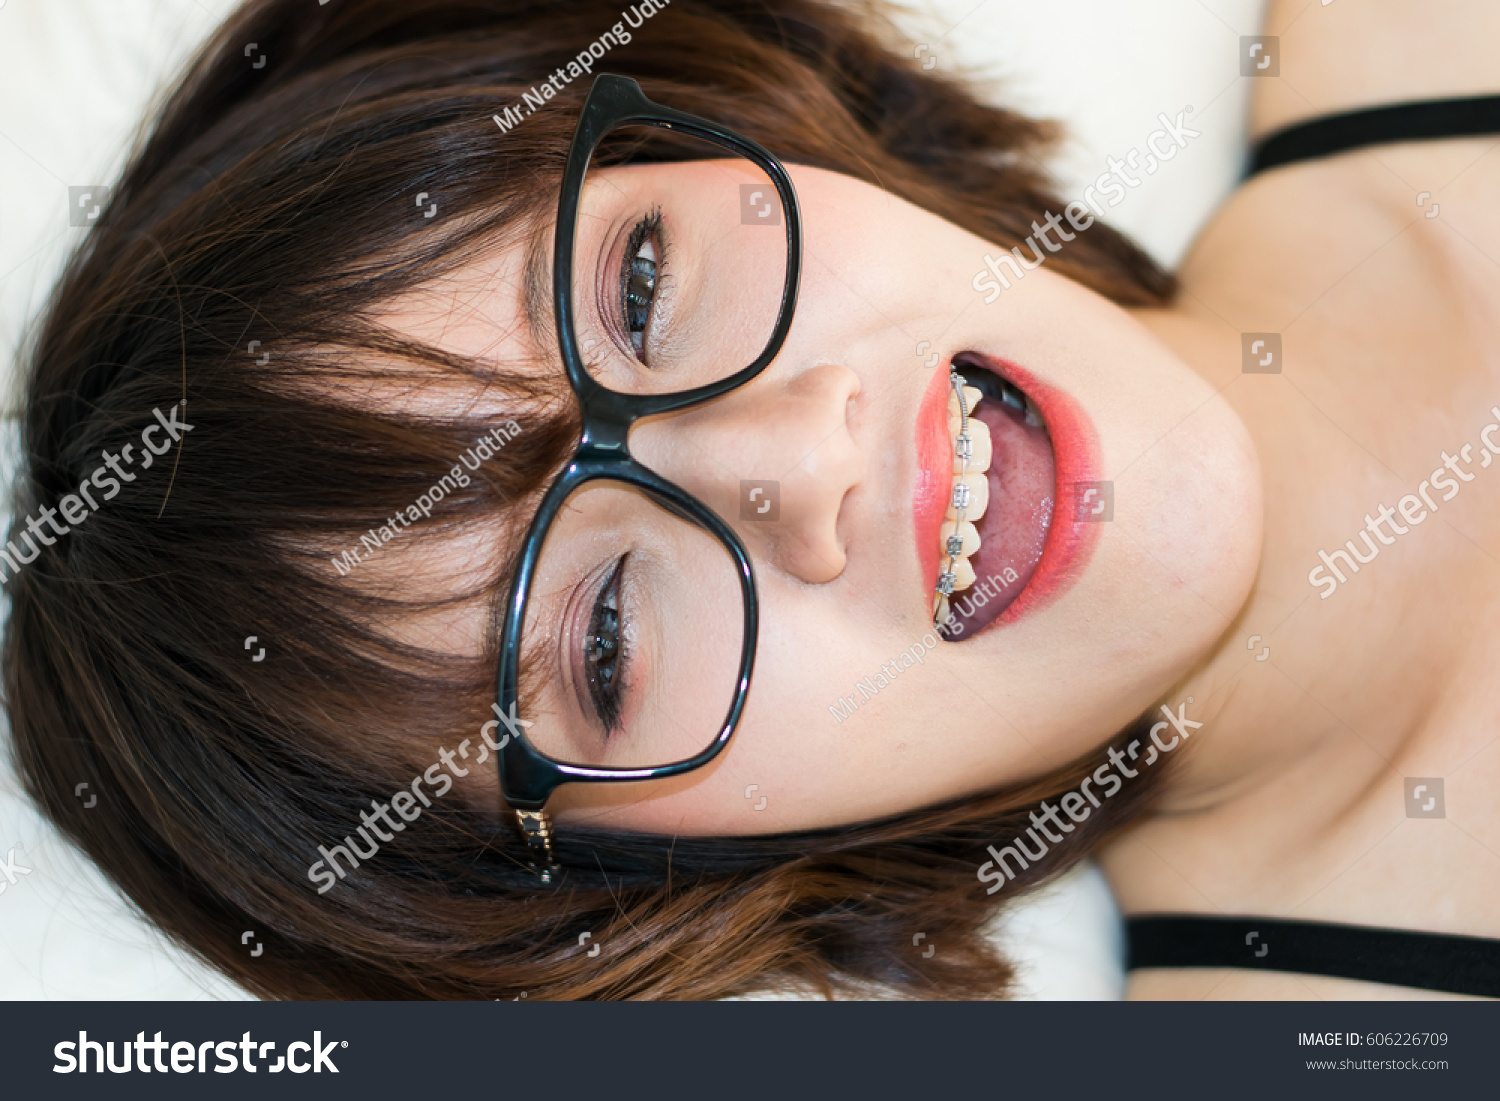 cute asian girl glasses